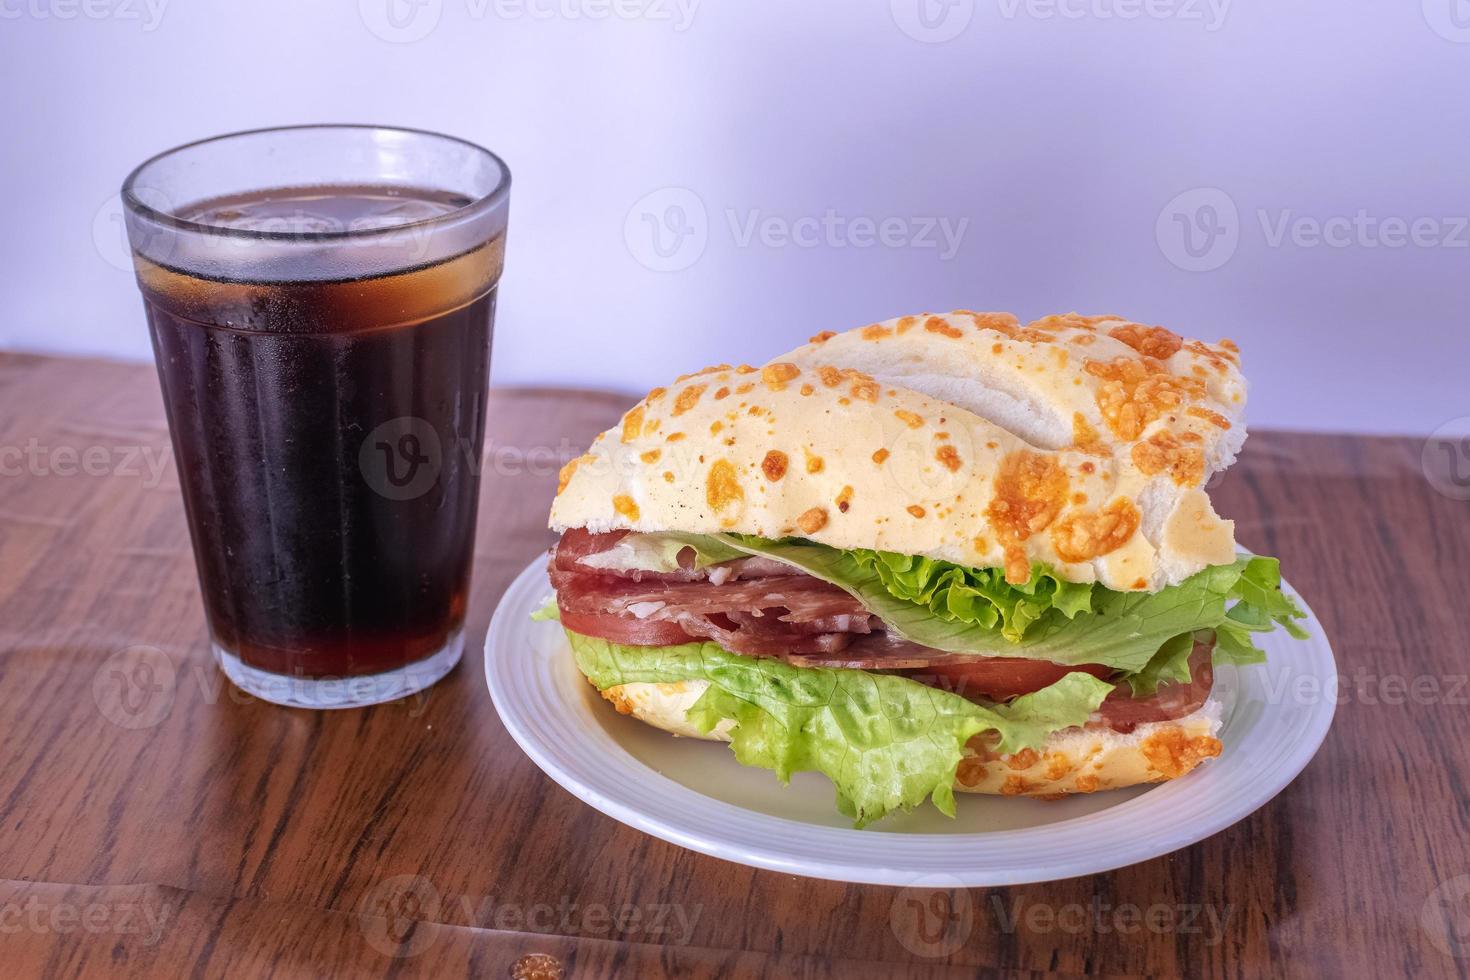 Sandwich mit Salat foto